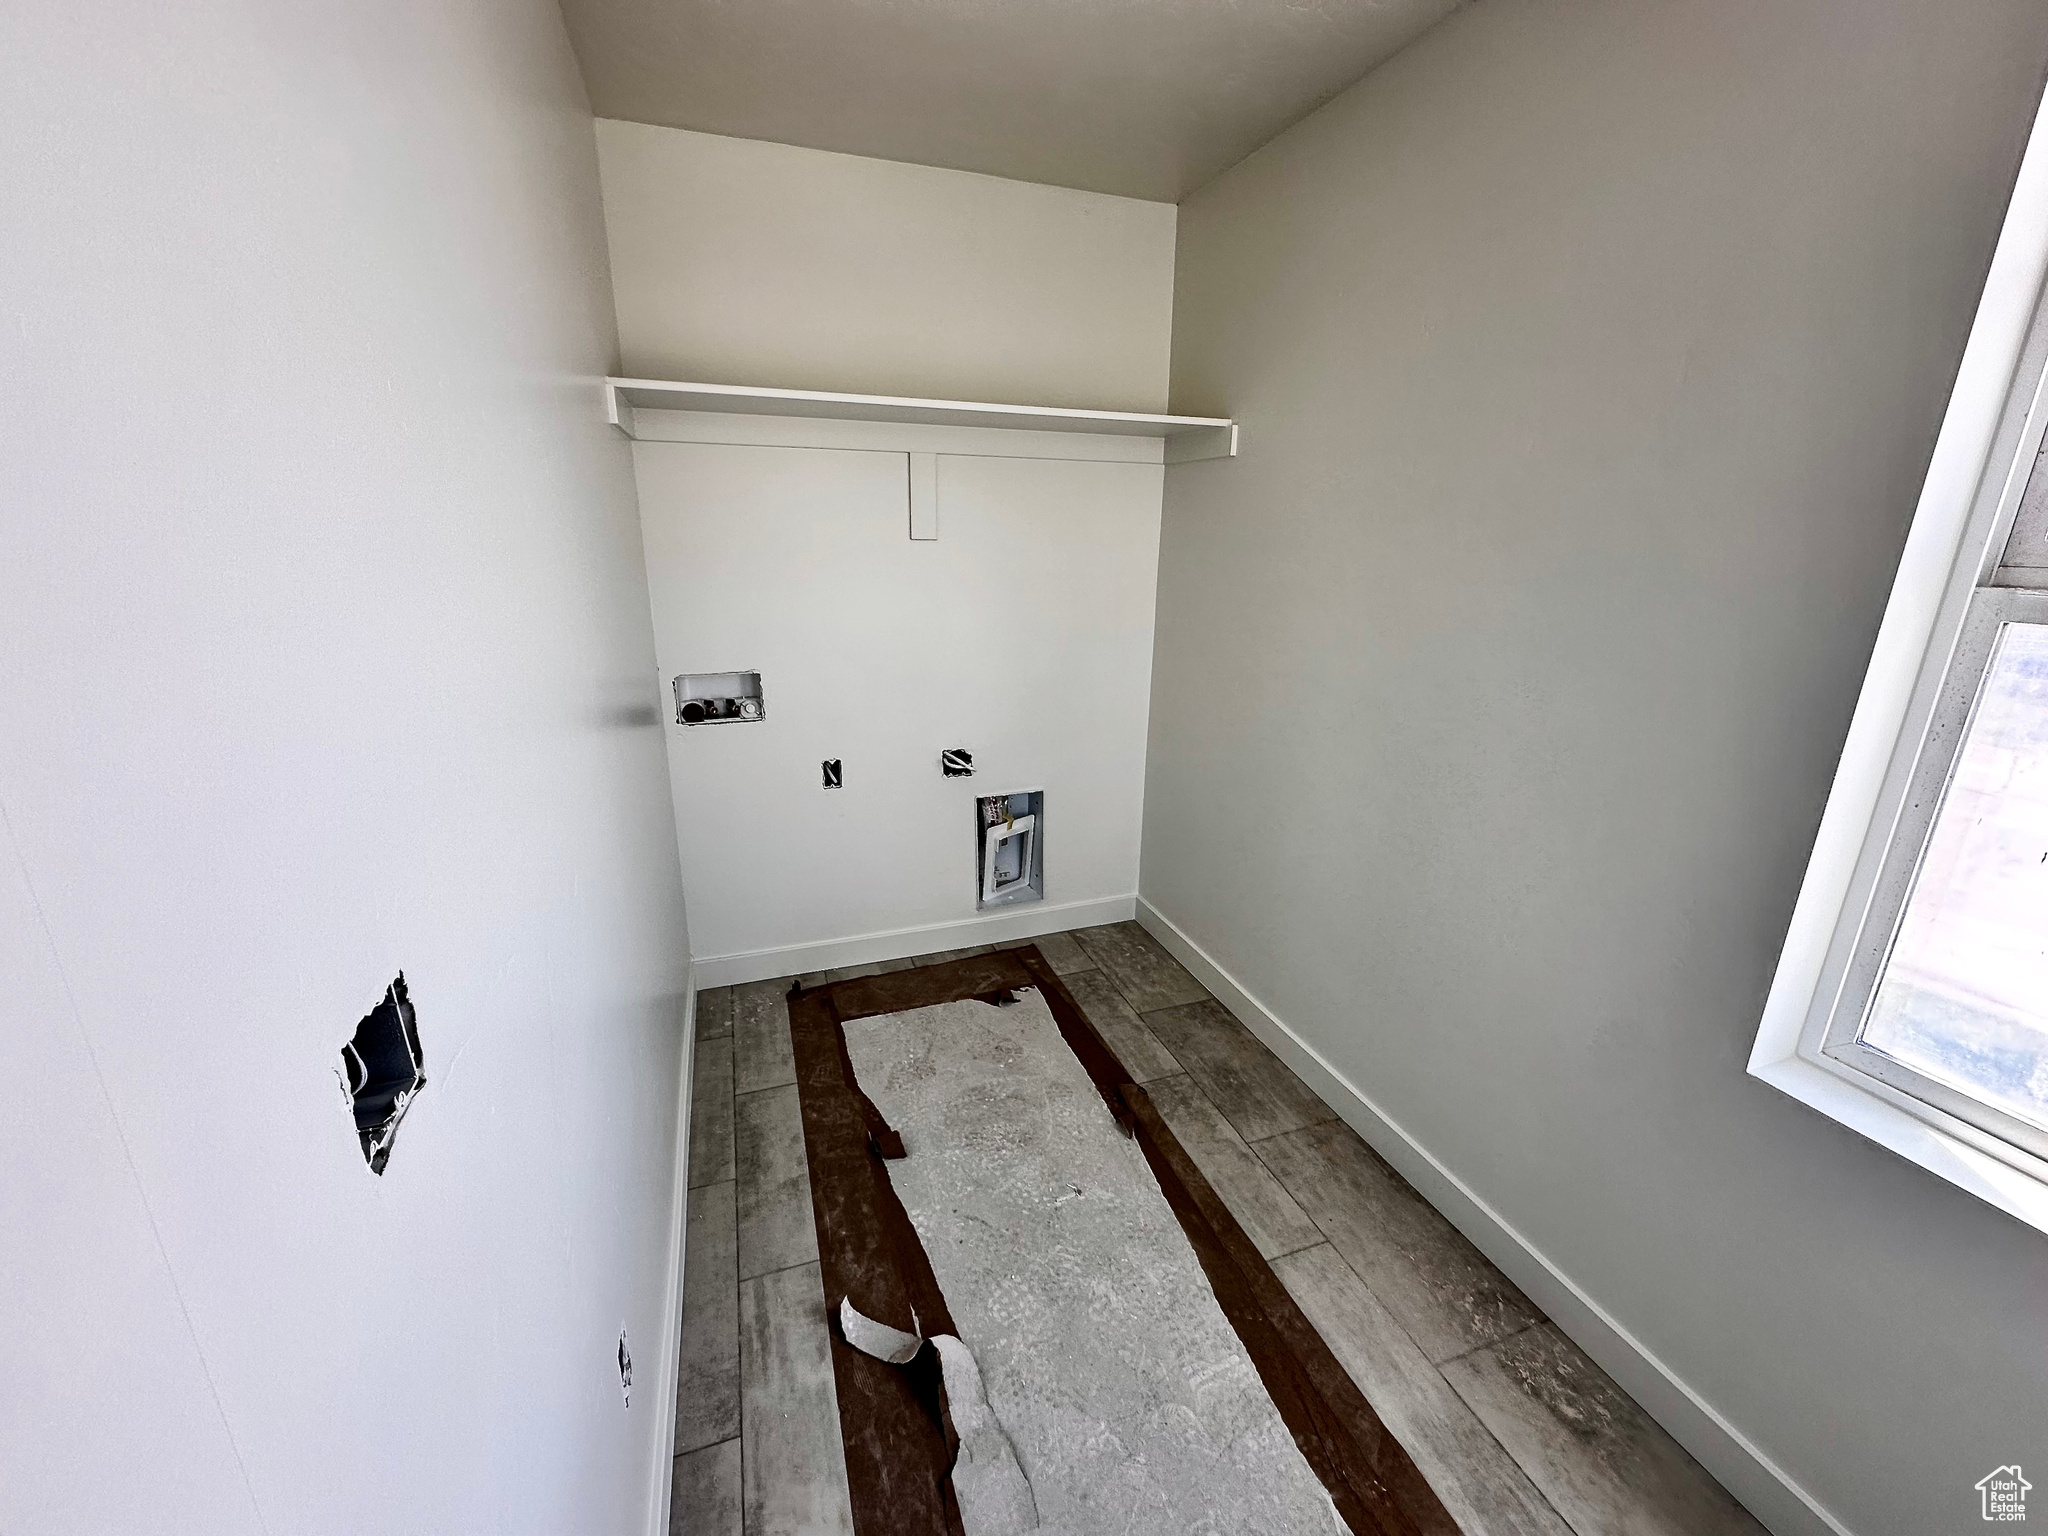 Laundry room with dark hardwood / wood-style flooring and washer hookup